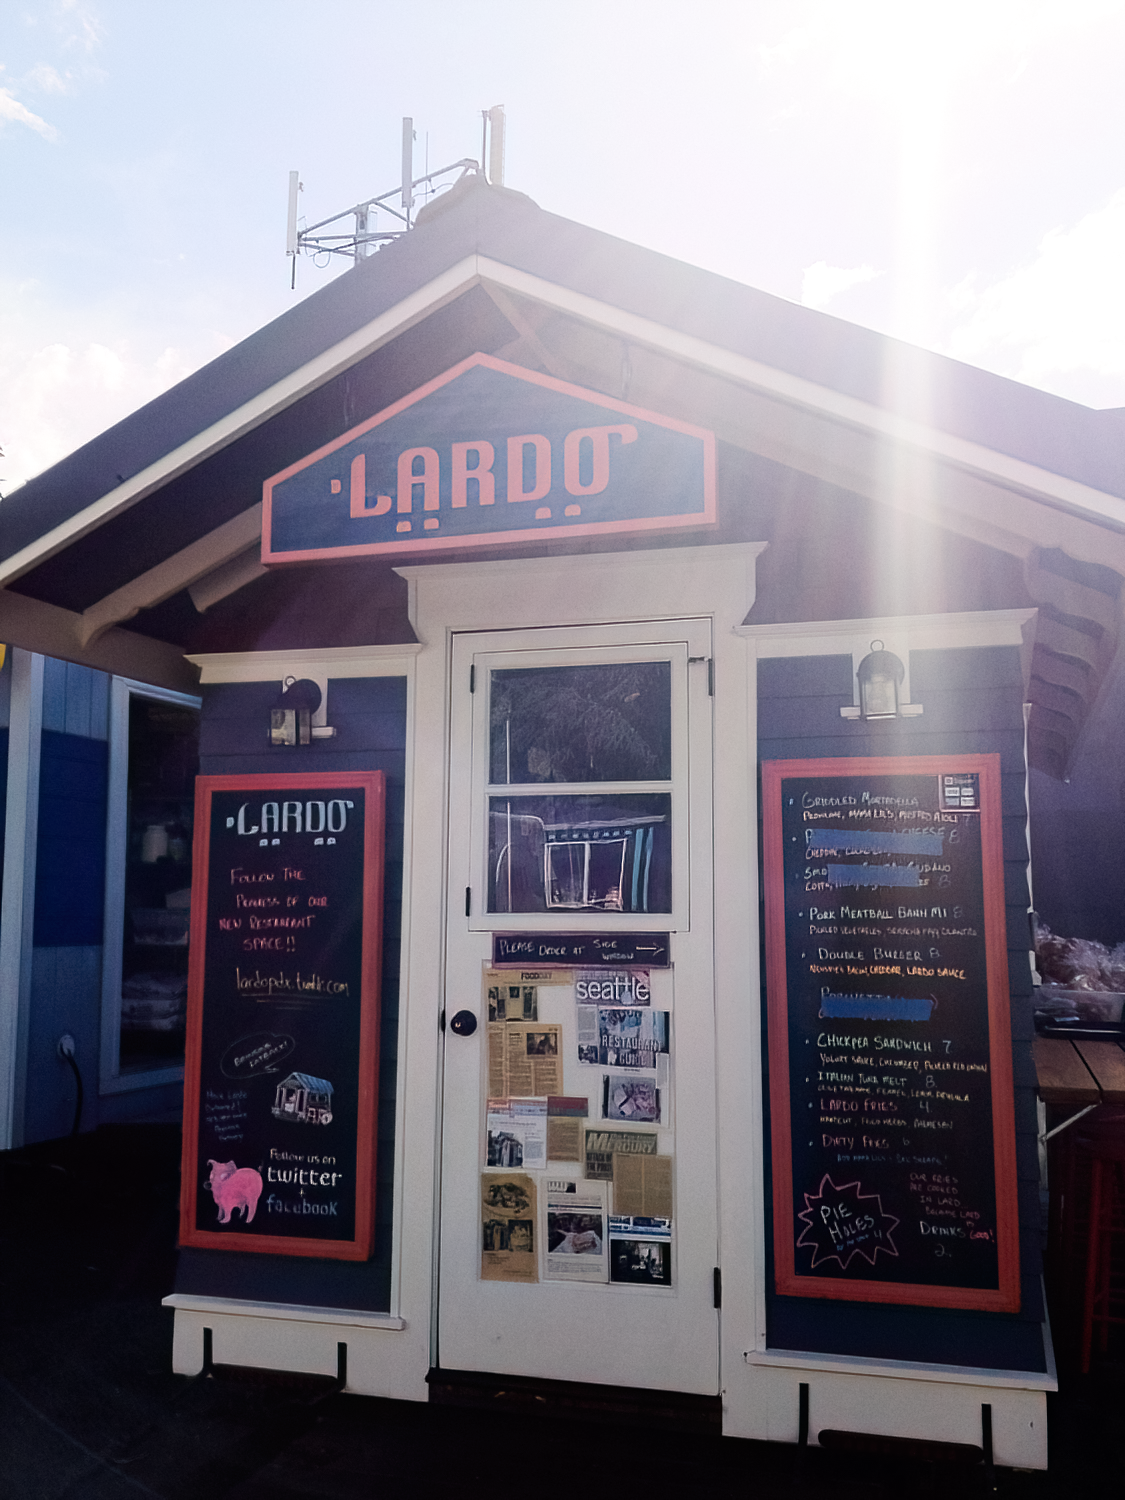 The Lardo Foot Cart at the Good Food Here Food Cart Pod on Belmont in Portland Oregon